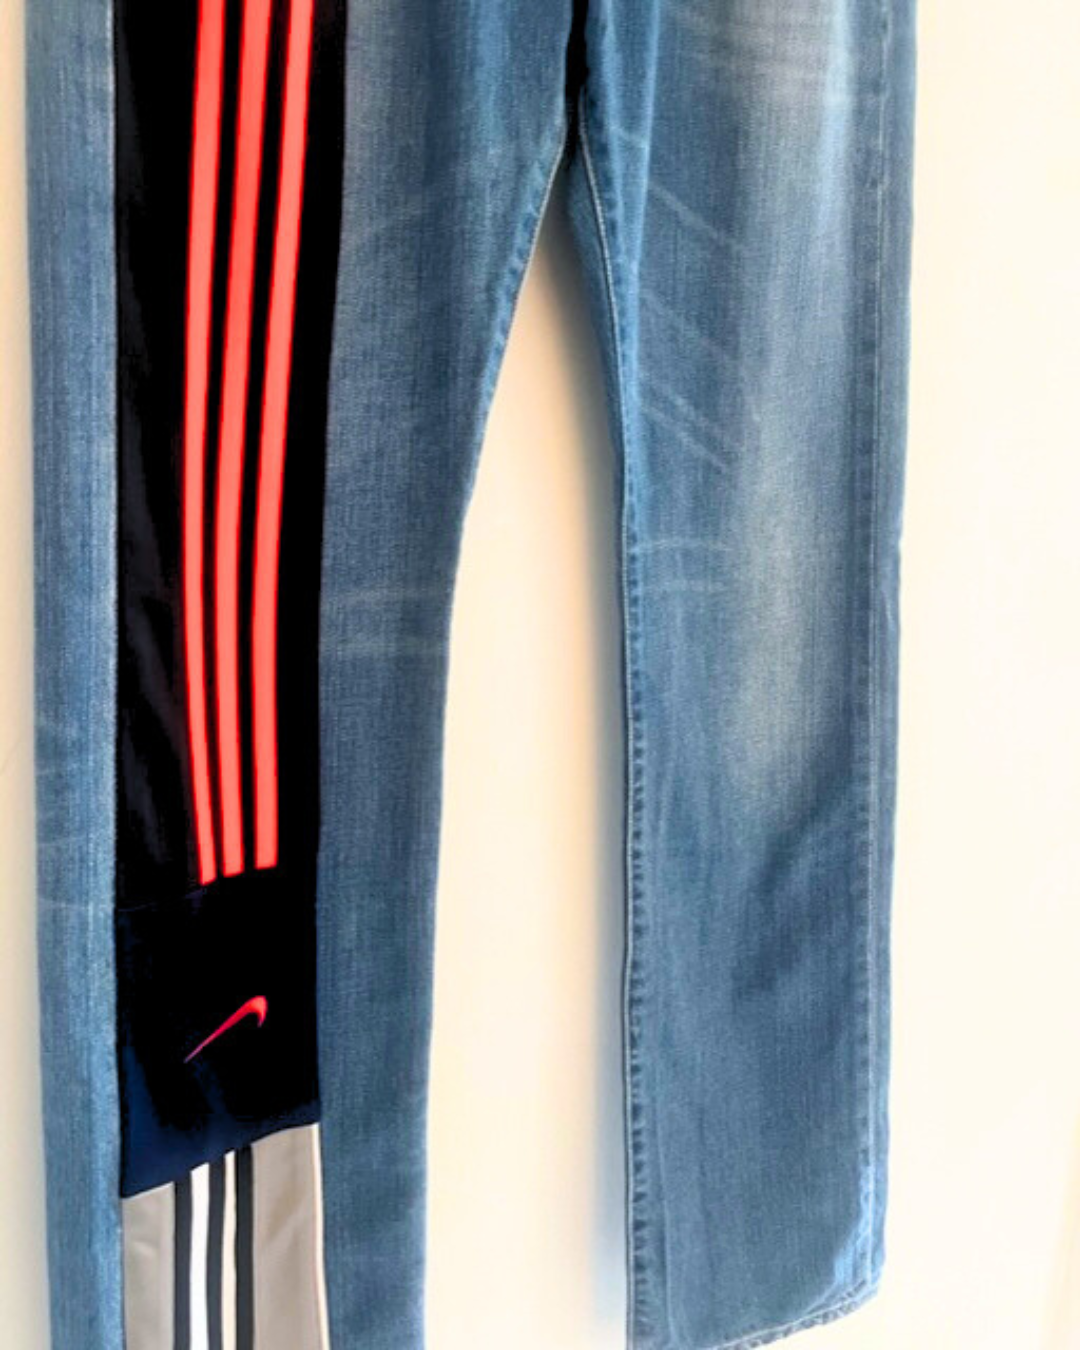 Vintage LEVIS 501 Jeans with vintage sportswear panelling